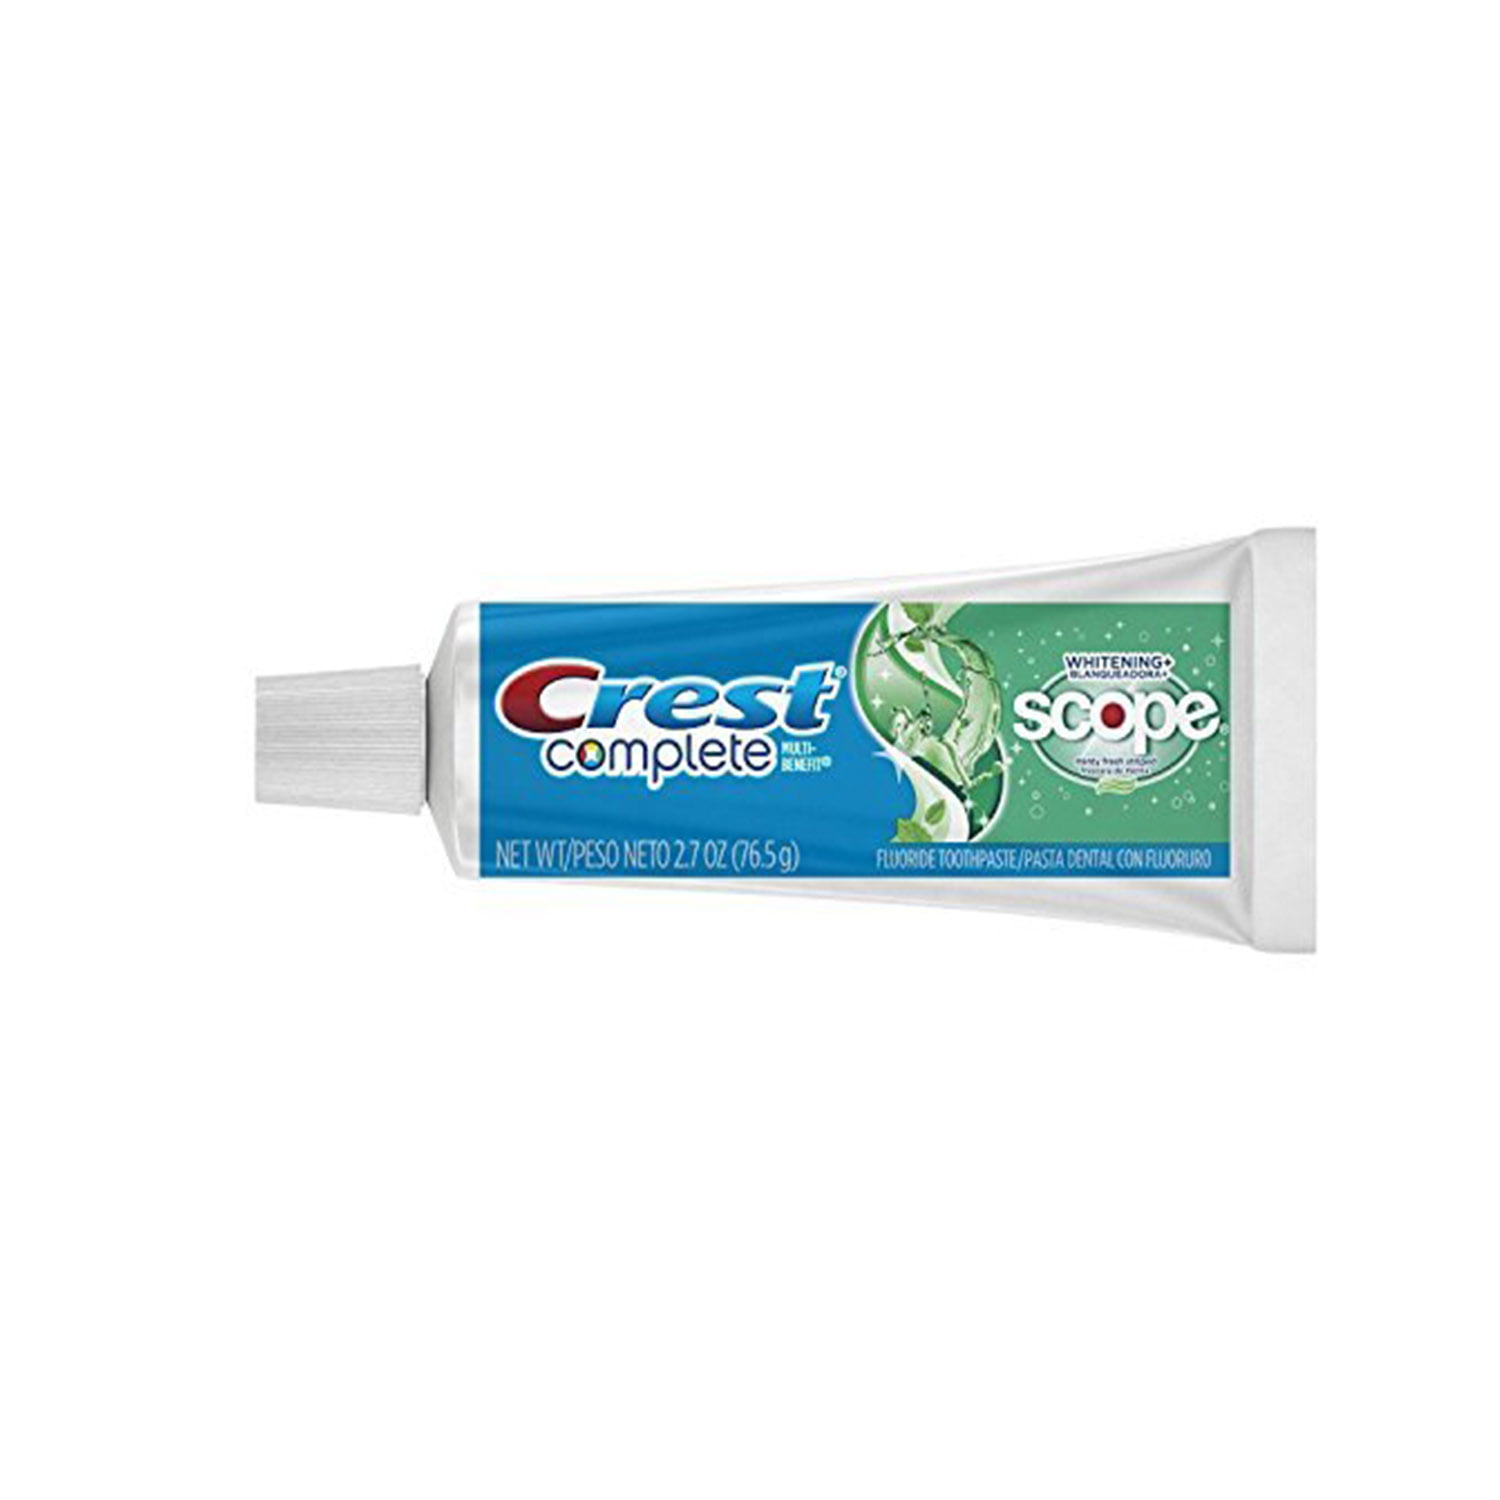 Пасто 2. Crest complete Whitening Plus scope Minty Fresh Toothpaste. Crest Dental. Зубная паста Crest Король Лев. Kinqo bano паста.